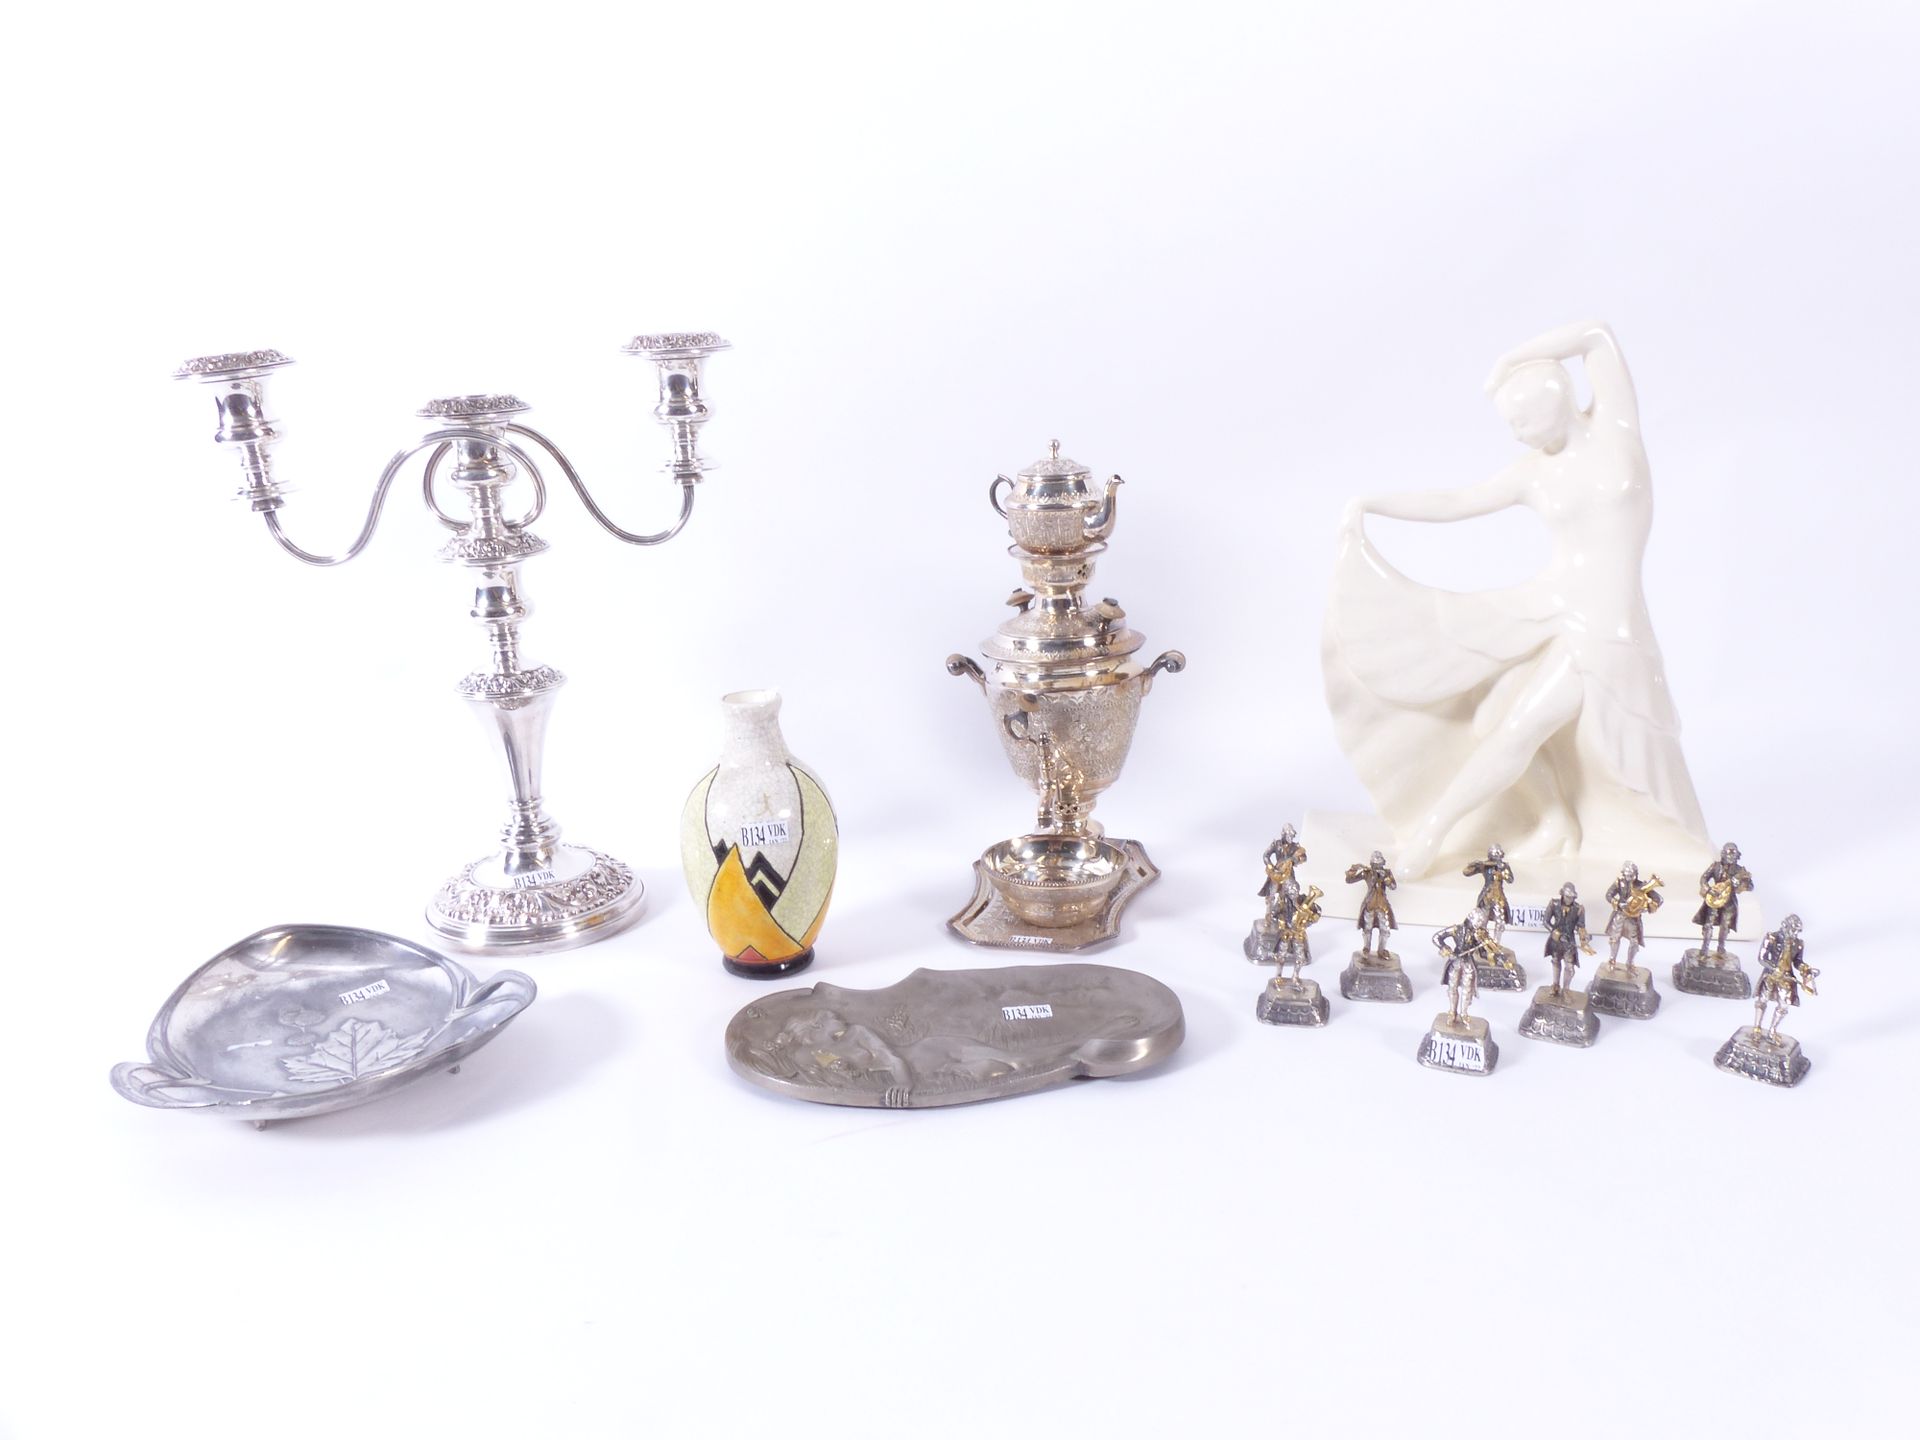 Null 一座雕像和一个花瓶，署名Boch la Louvière和Keramis，一个镀银茶炊，一个镀银烛台，两个锡制空洞和9个镀银和镀金铜制音乐家。